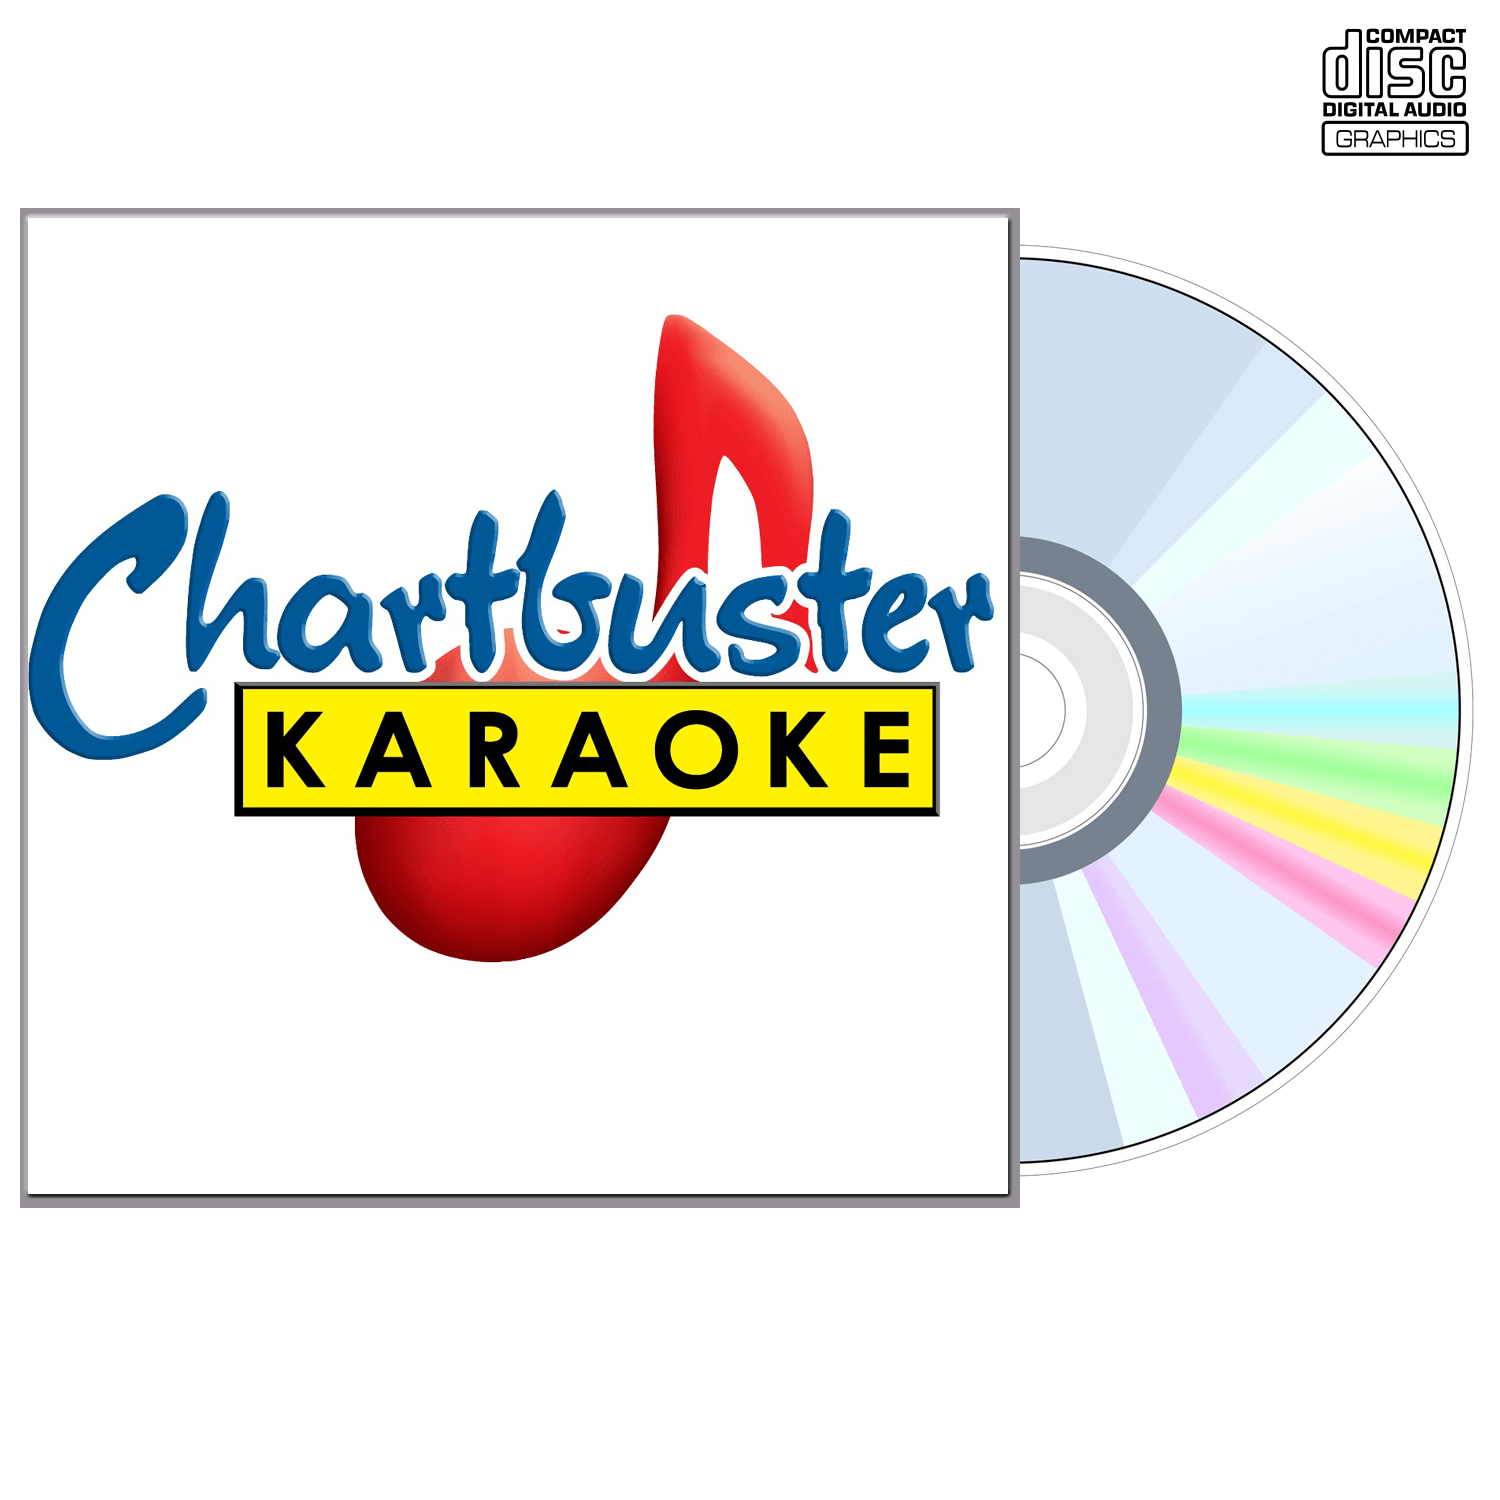 Four Tops - CD+G - Chartbuster Karaoke - Karaoke Home Entertainment